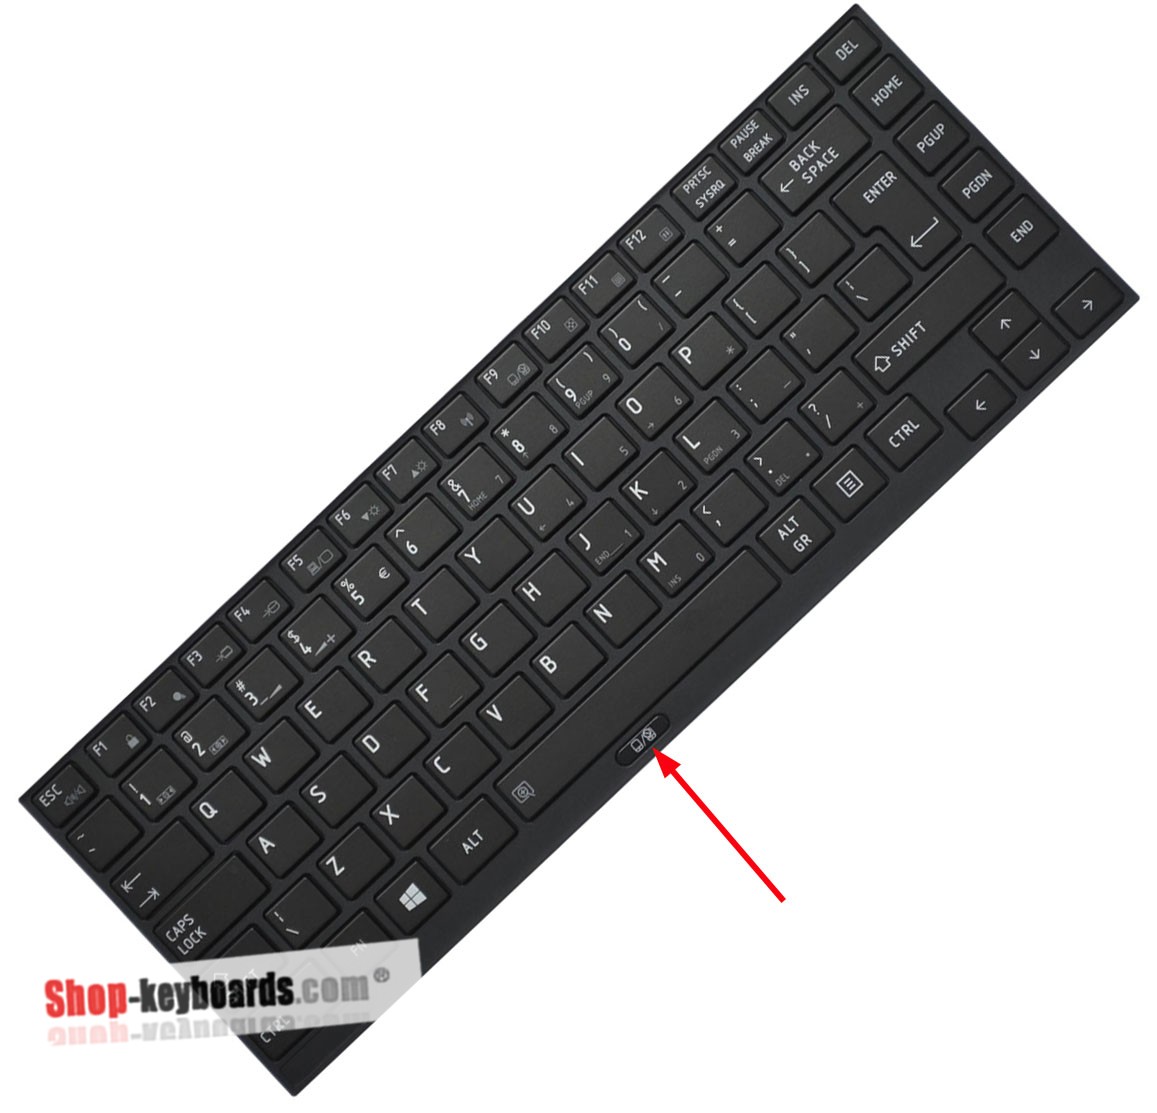 Toshiba Portege R930-006  Keyboard replacement